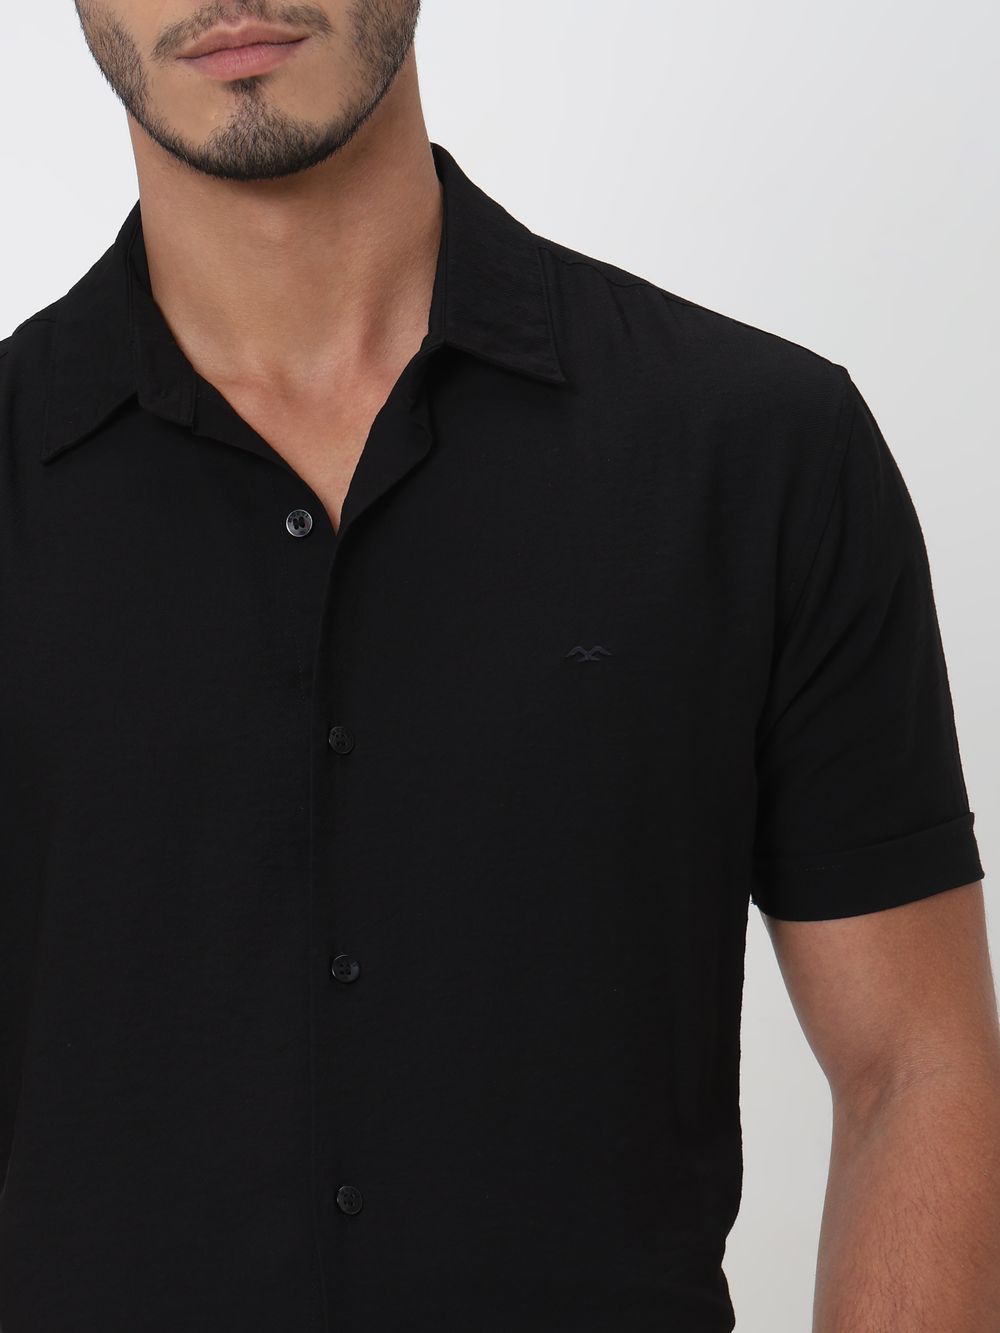 Black Textured Viscose Blend Plain Slim Fit Casual Shirt